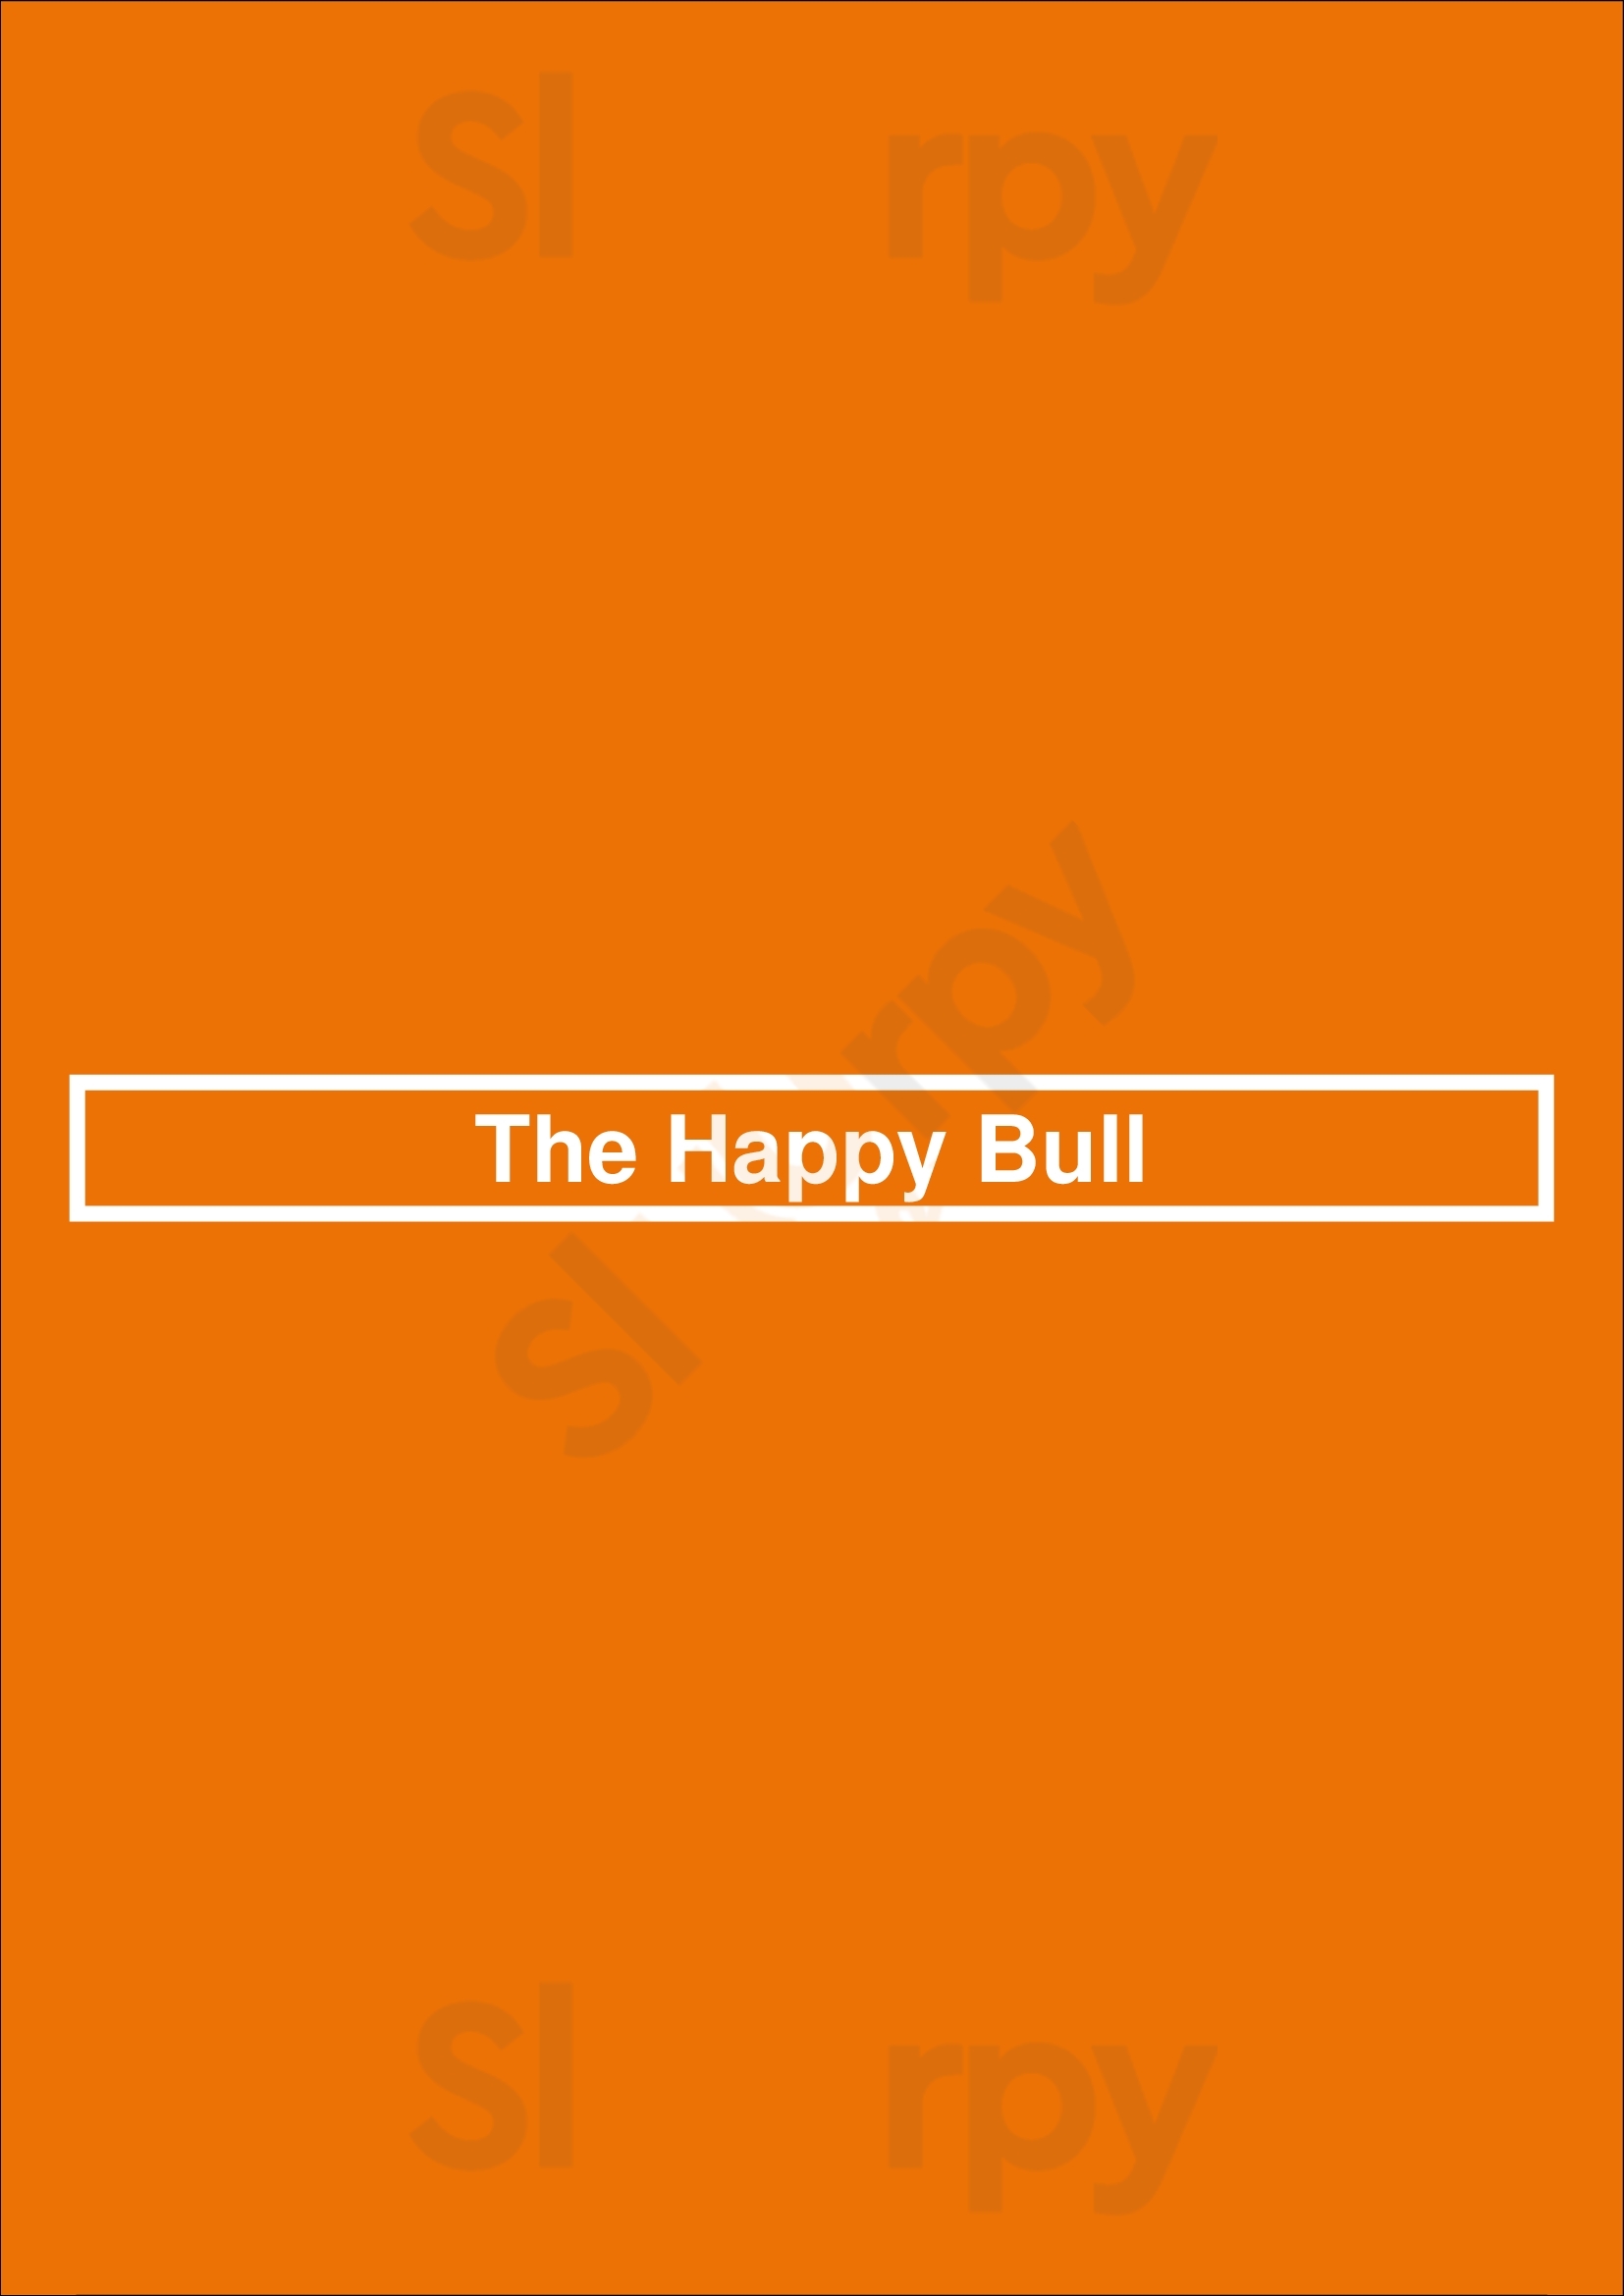 The Happy Bull Amsterdam Menu - 1